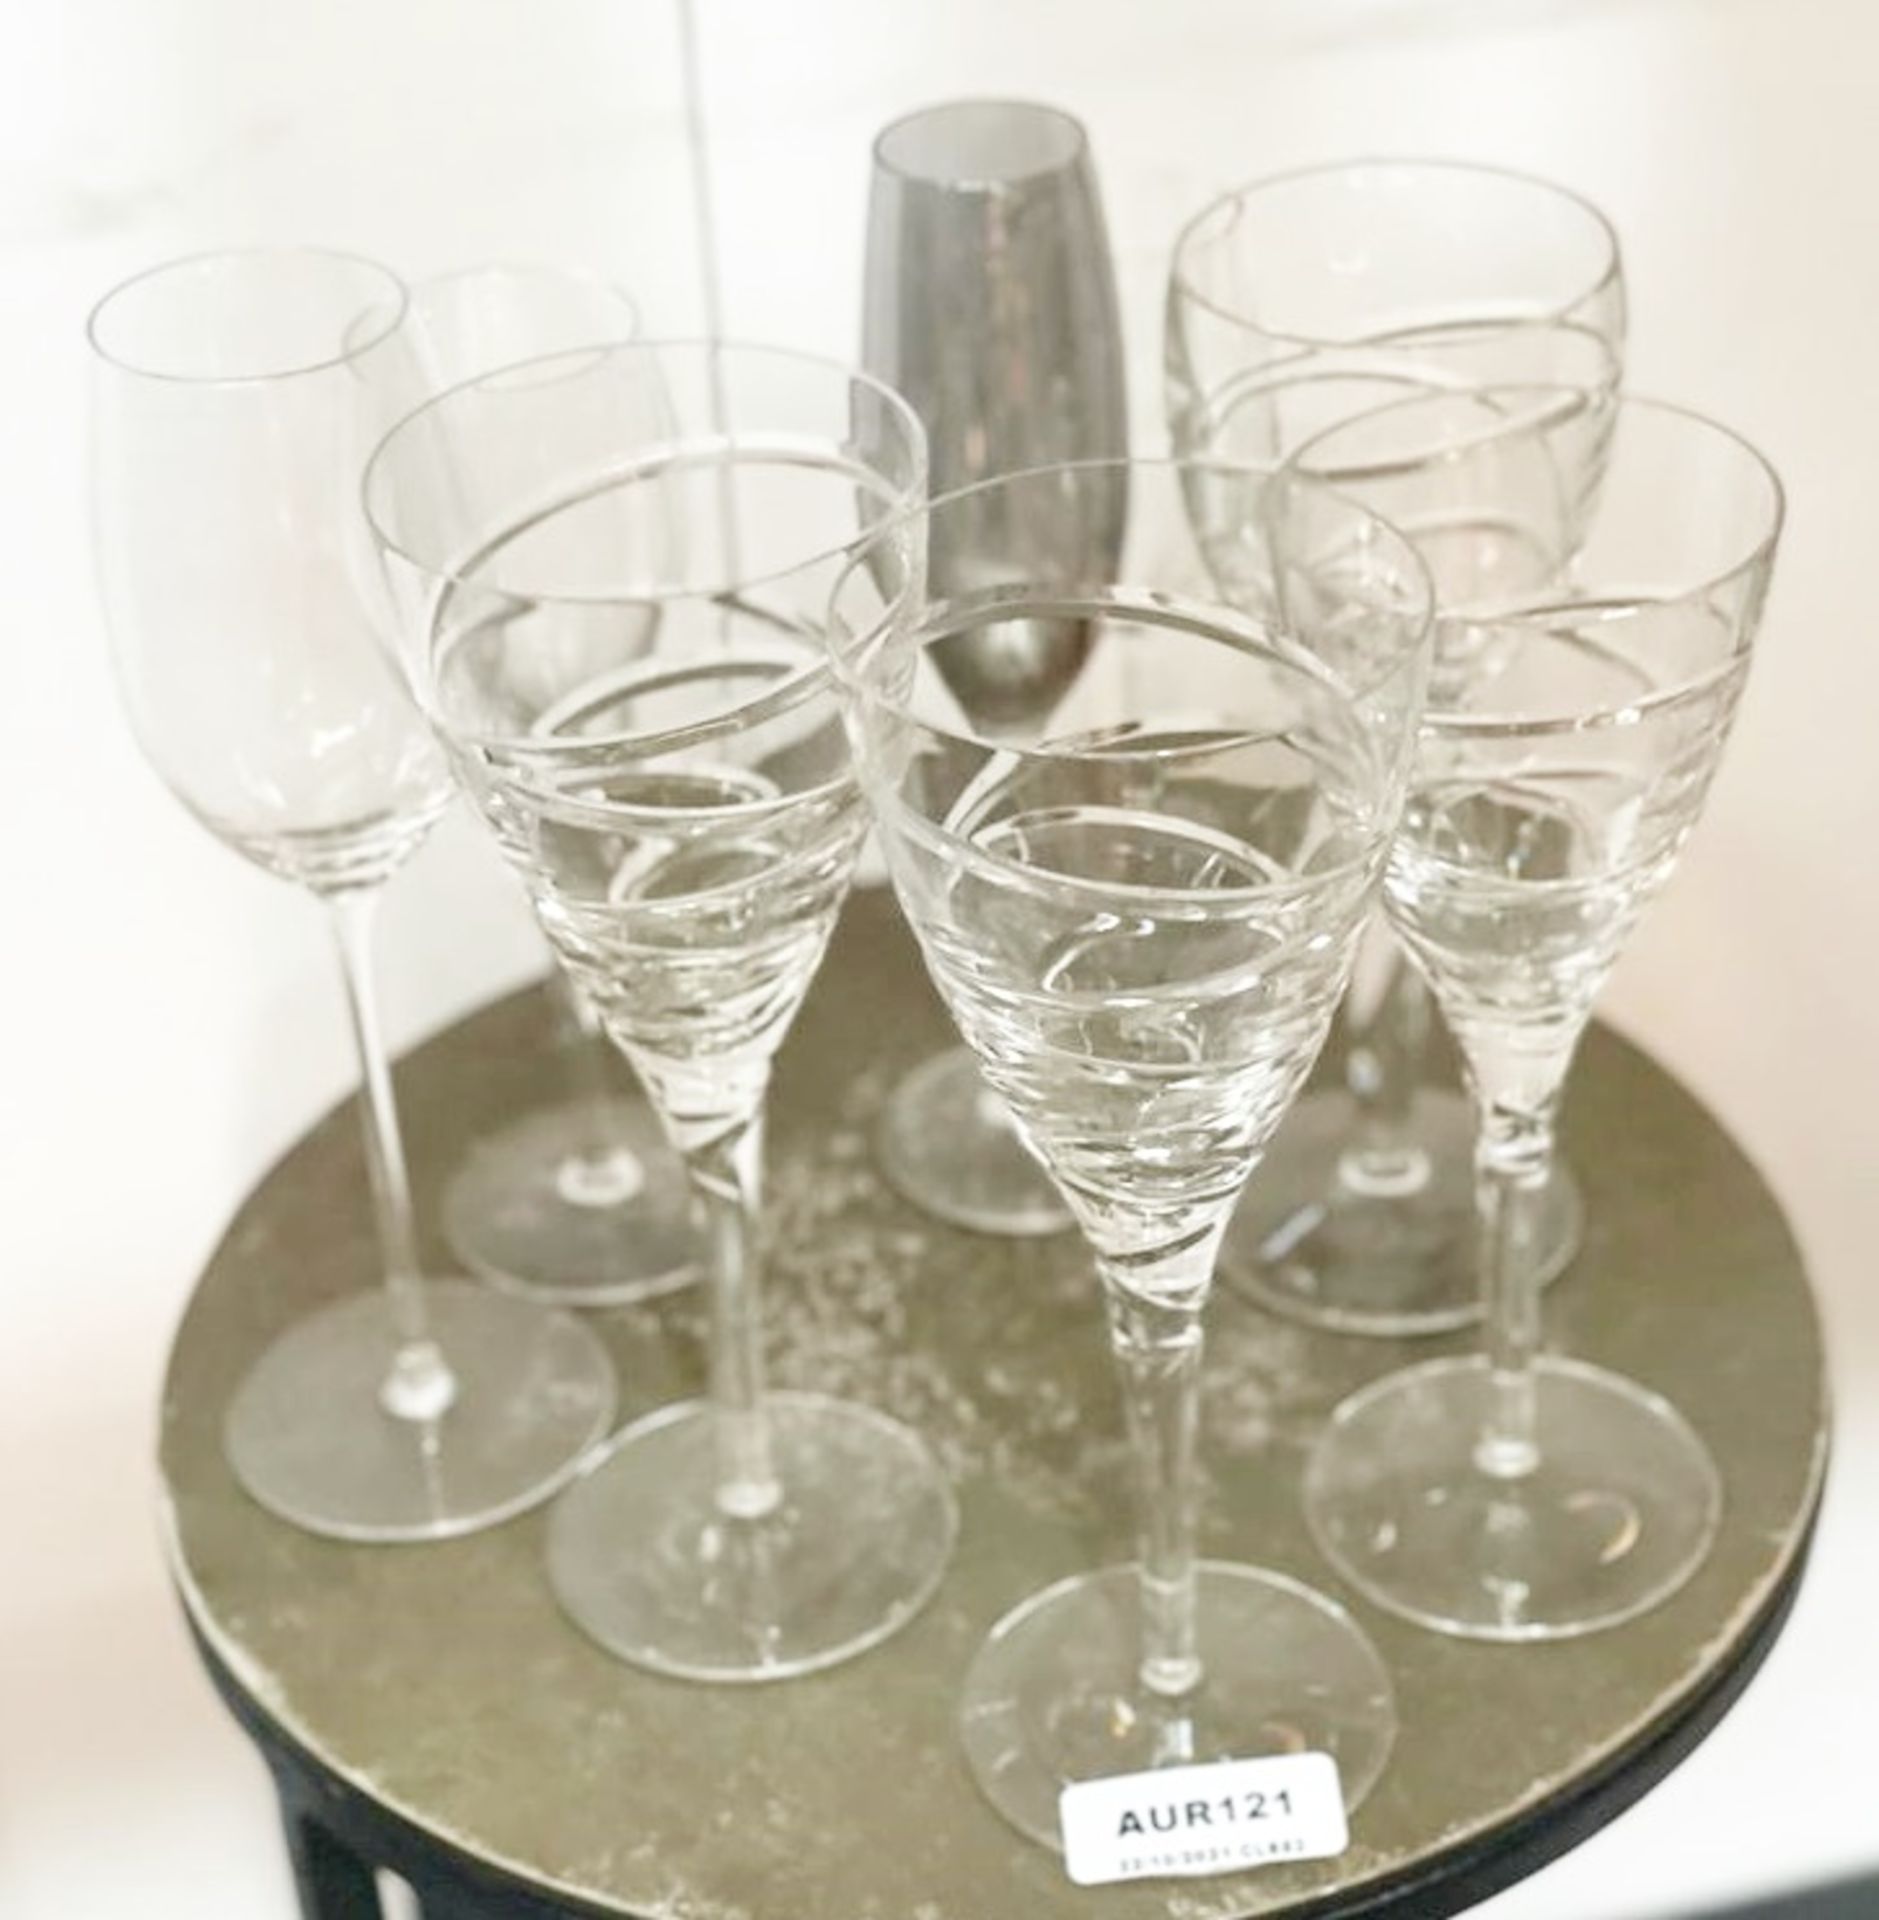 1 x  Collection Of Glassware Including One Jasper Conrad Wine Glass  - Ref: AUR121 - CL652 - - Image 2 of 3